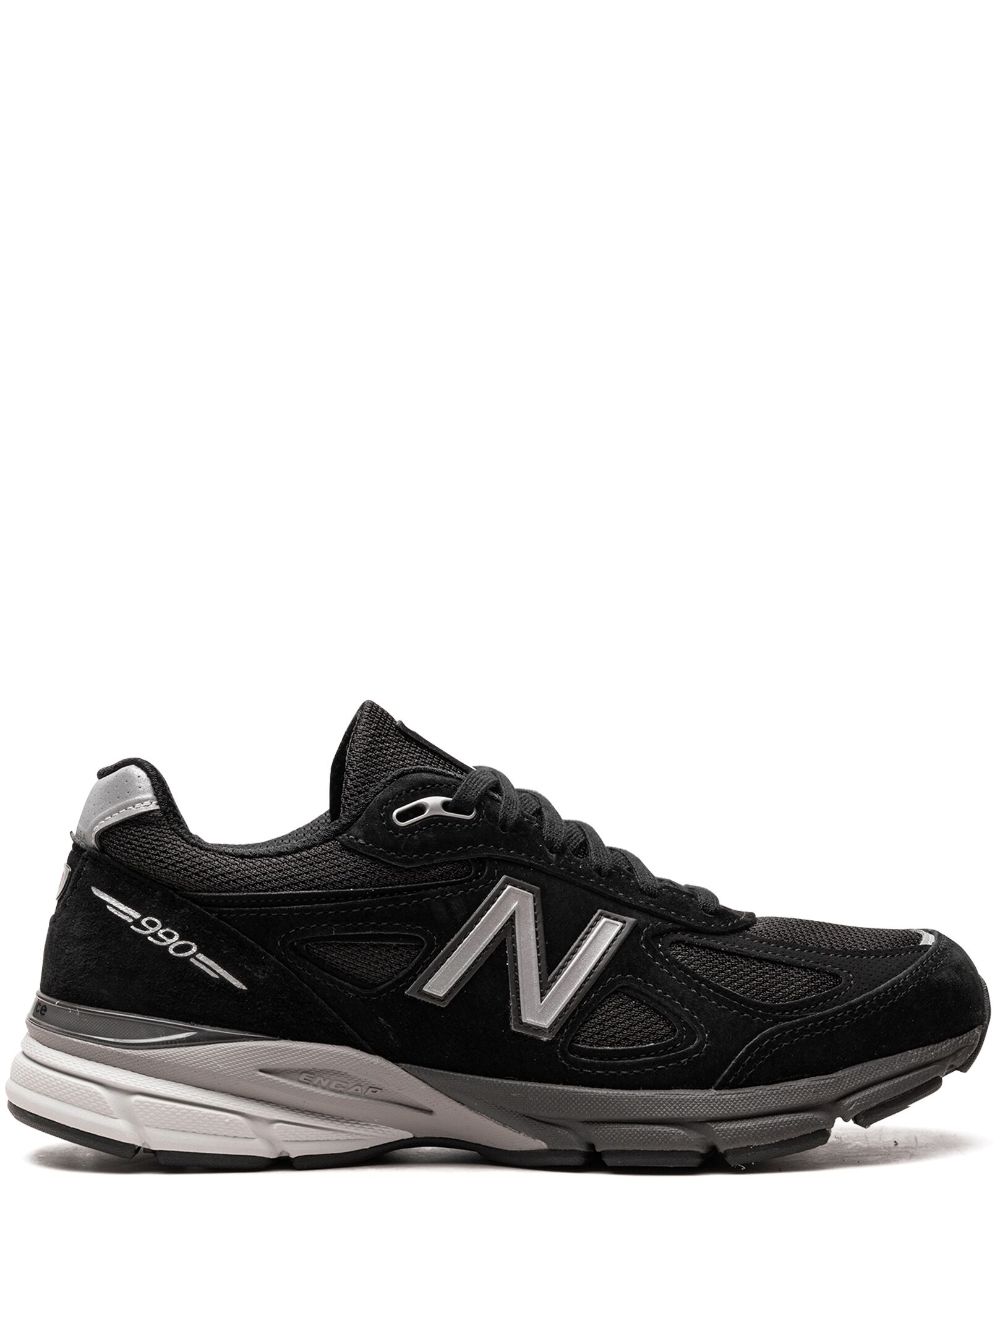 New Balance Made in USA 990v4 Black/Silver Sneakers - Schwarz von New Balance